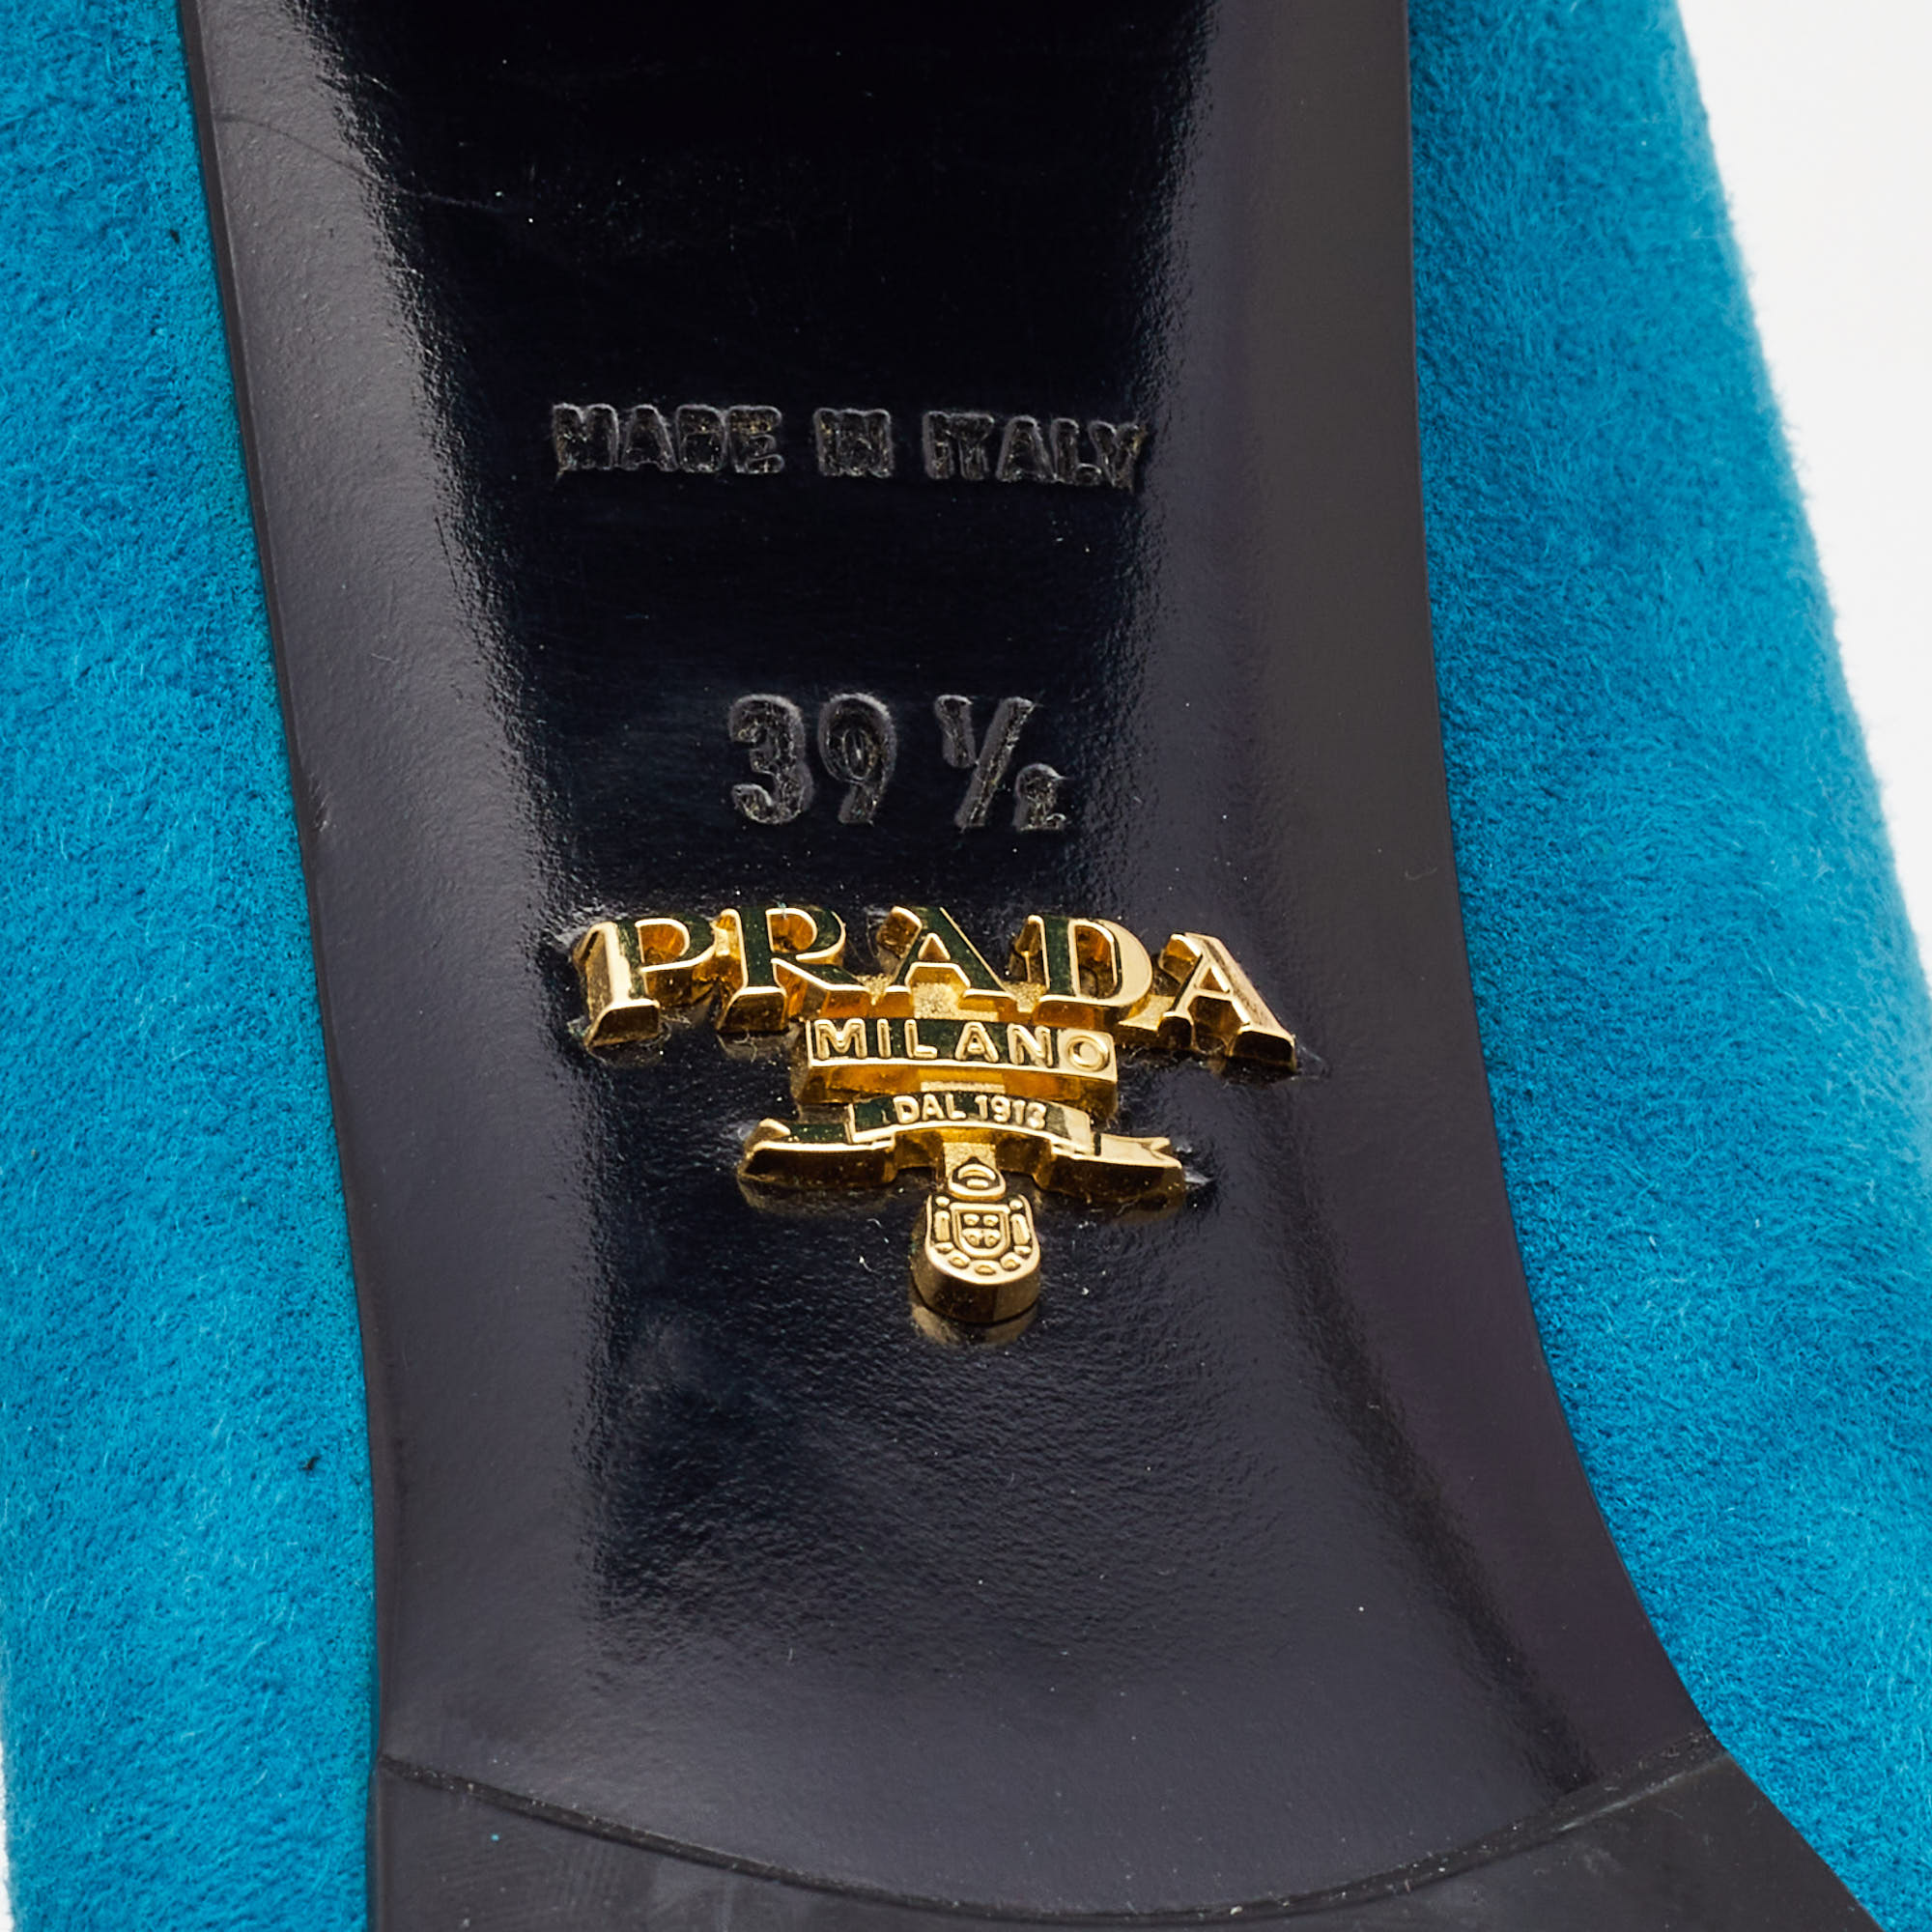 Prada Blue Suede Block Heel Pumps Size 39.5